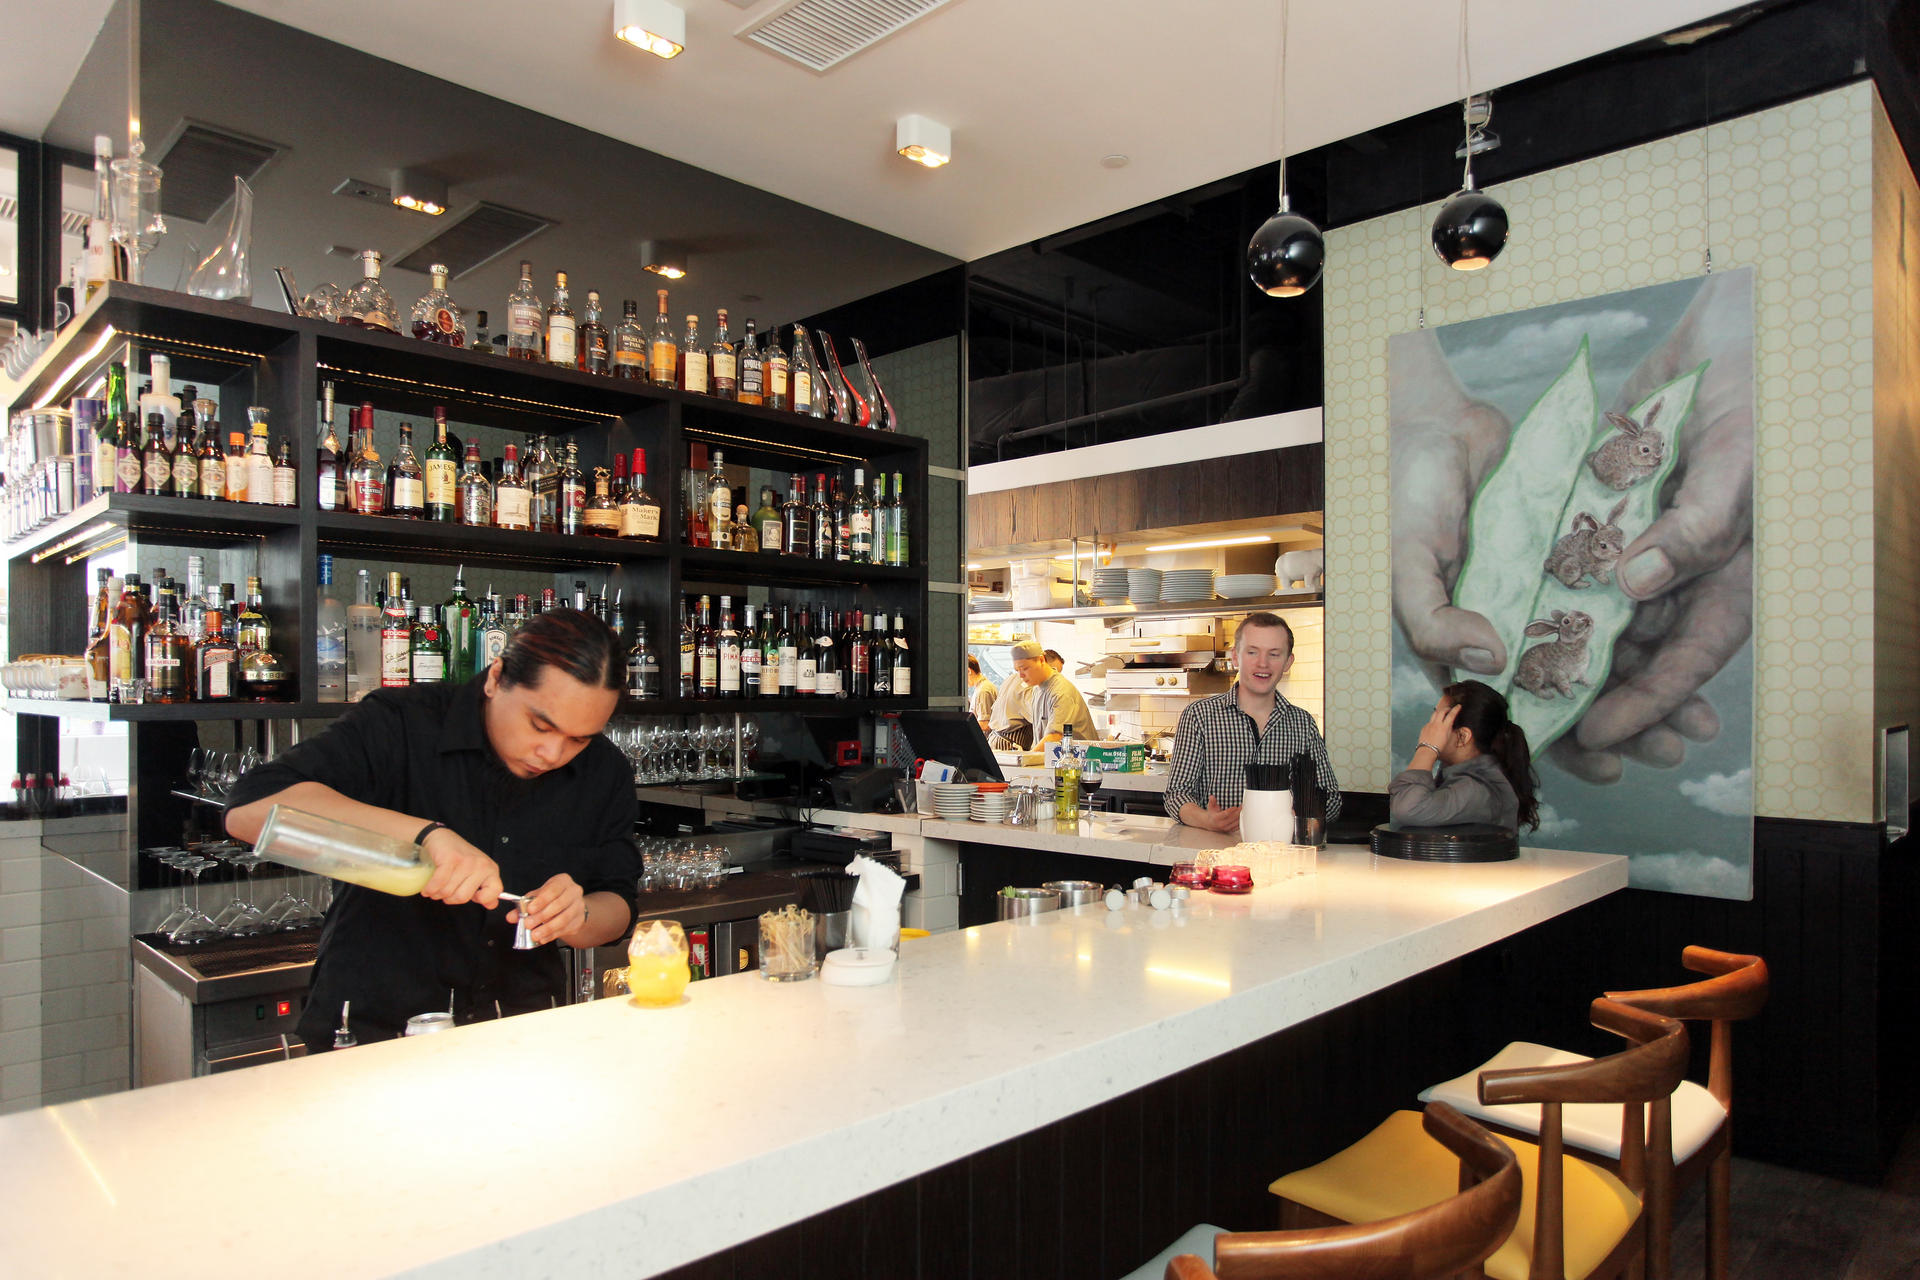 A view of the bar. Photos: Paul Yeung, Dickson Lee